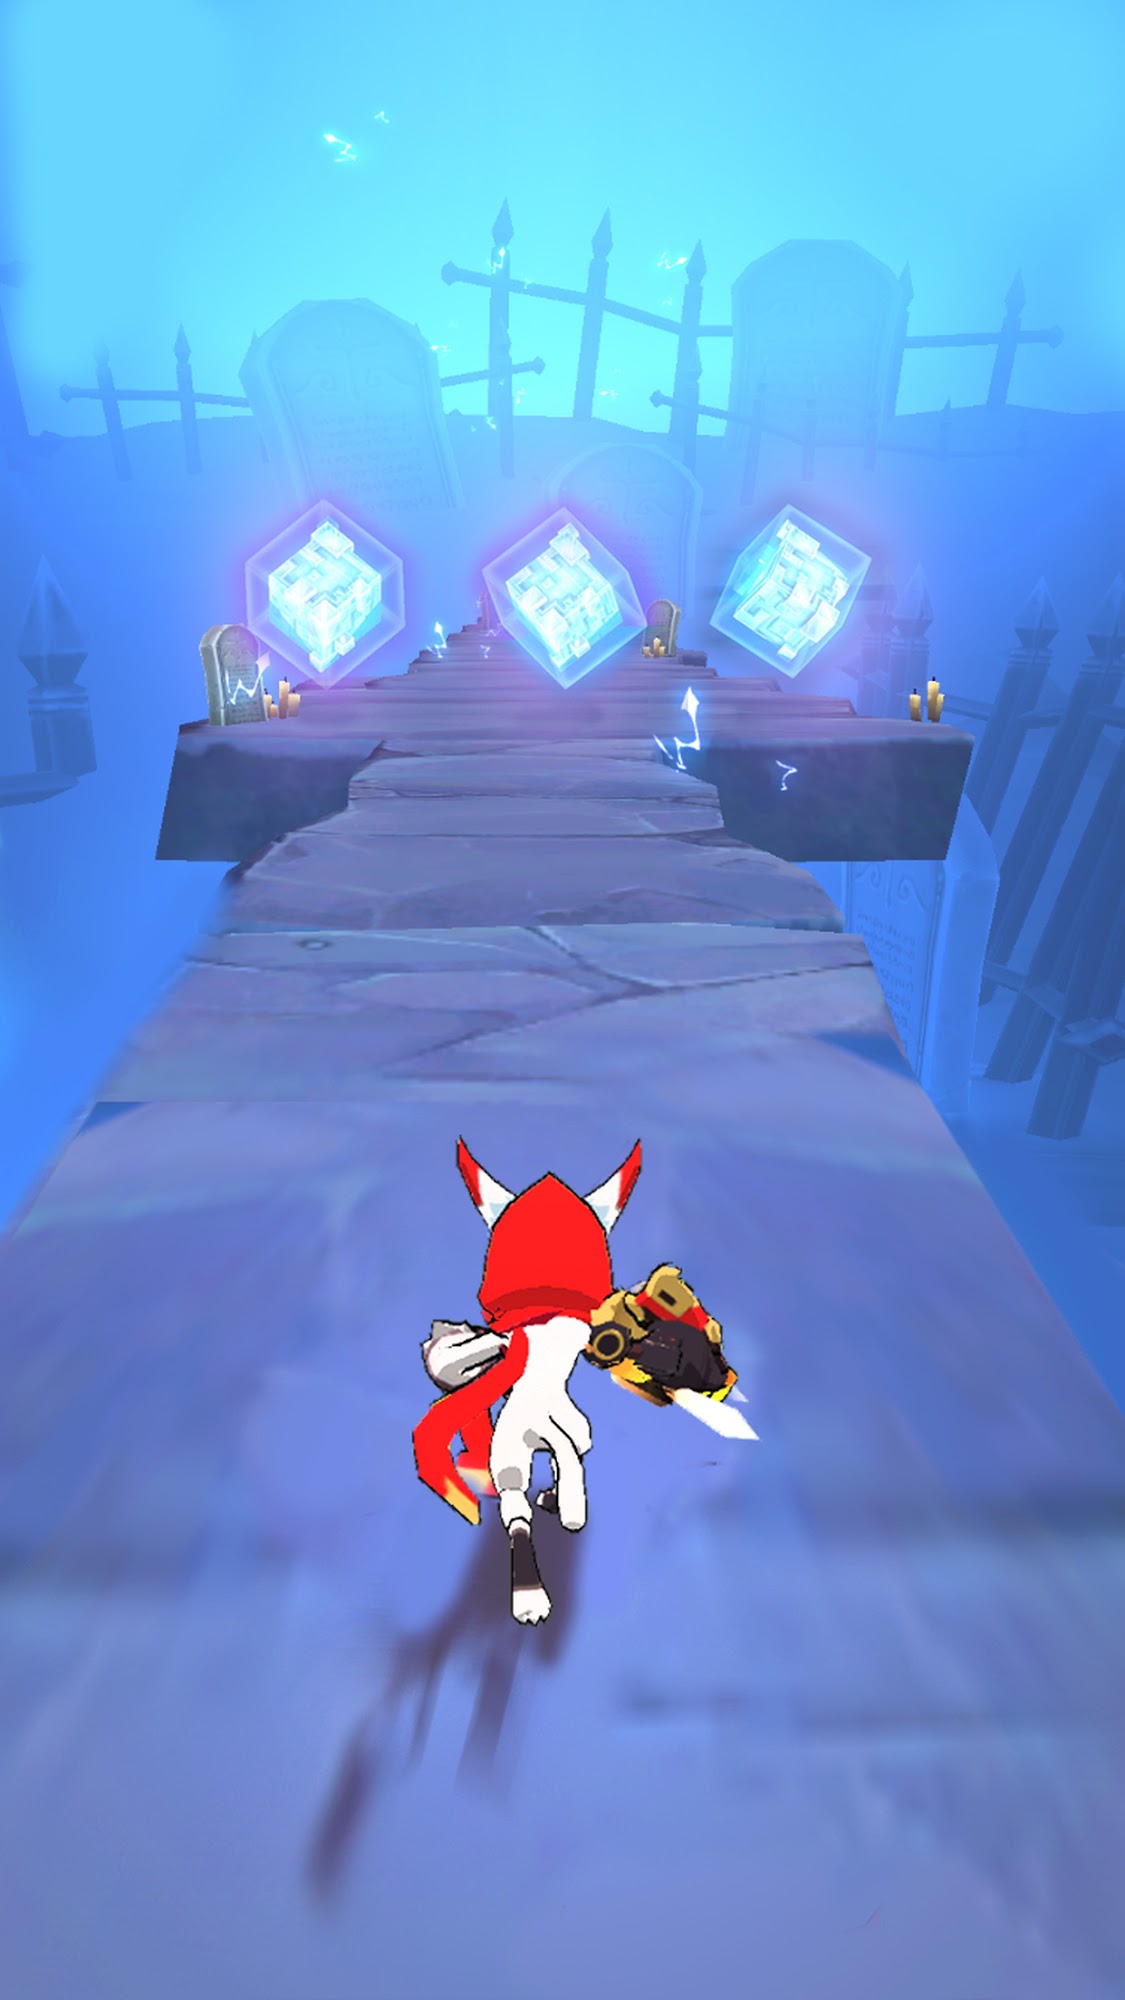 Kinja Run - Android game screenshots.